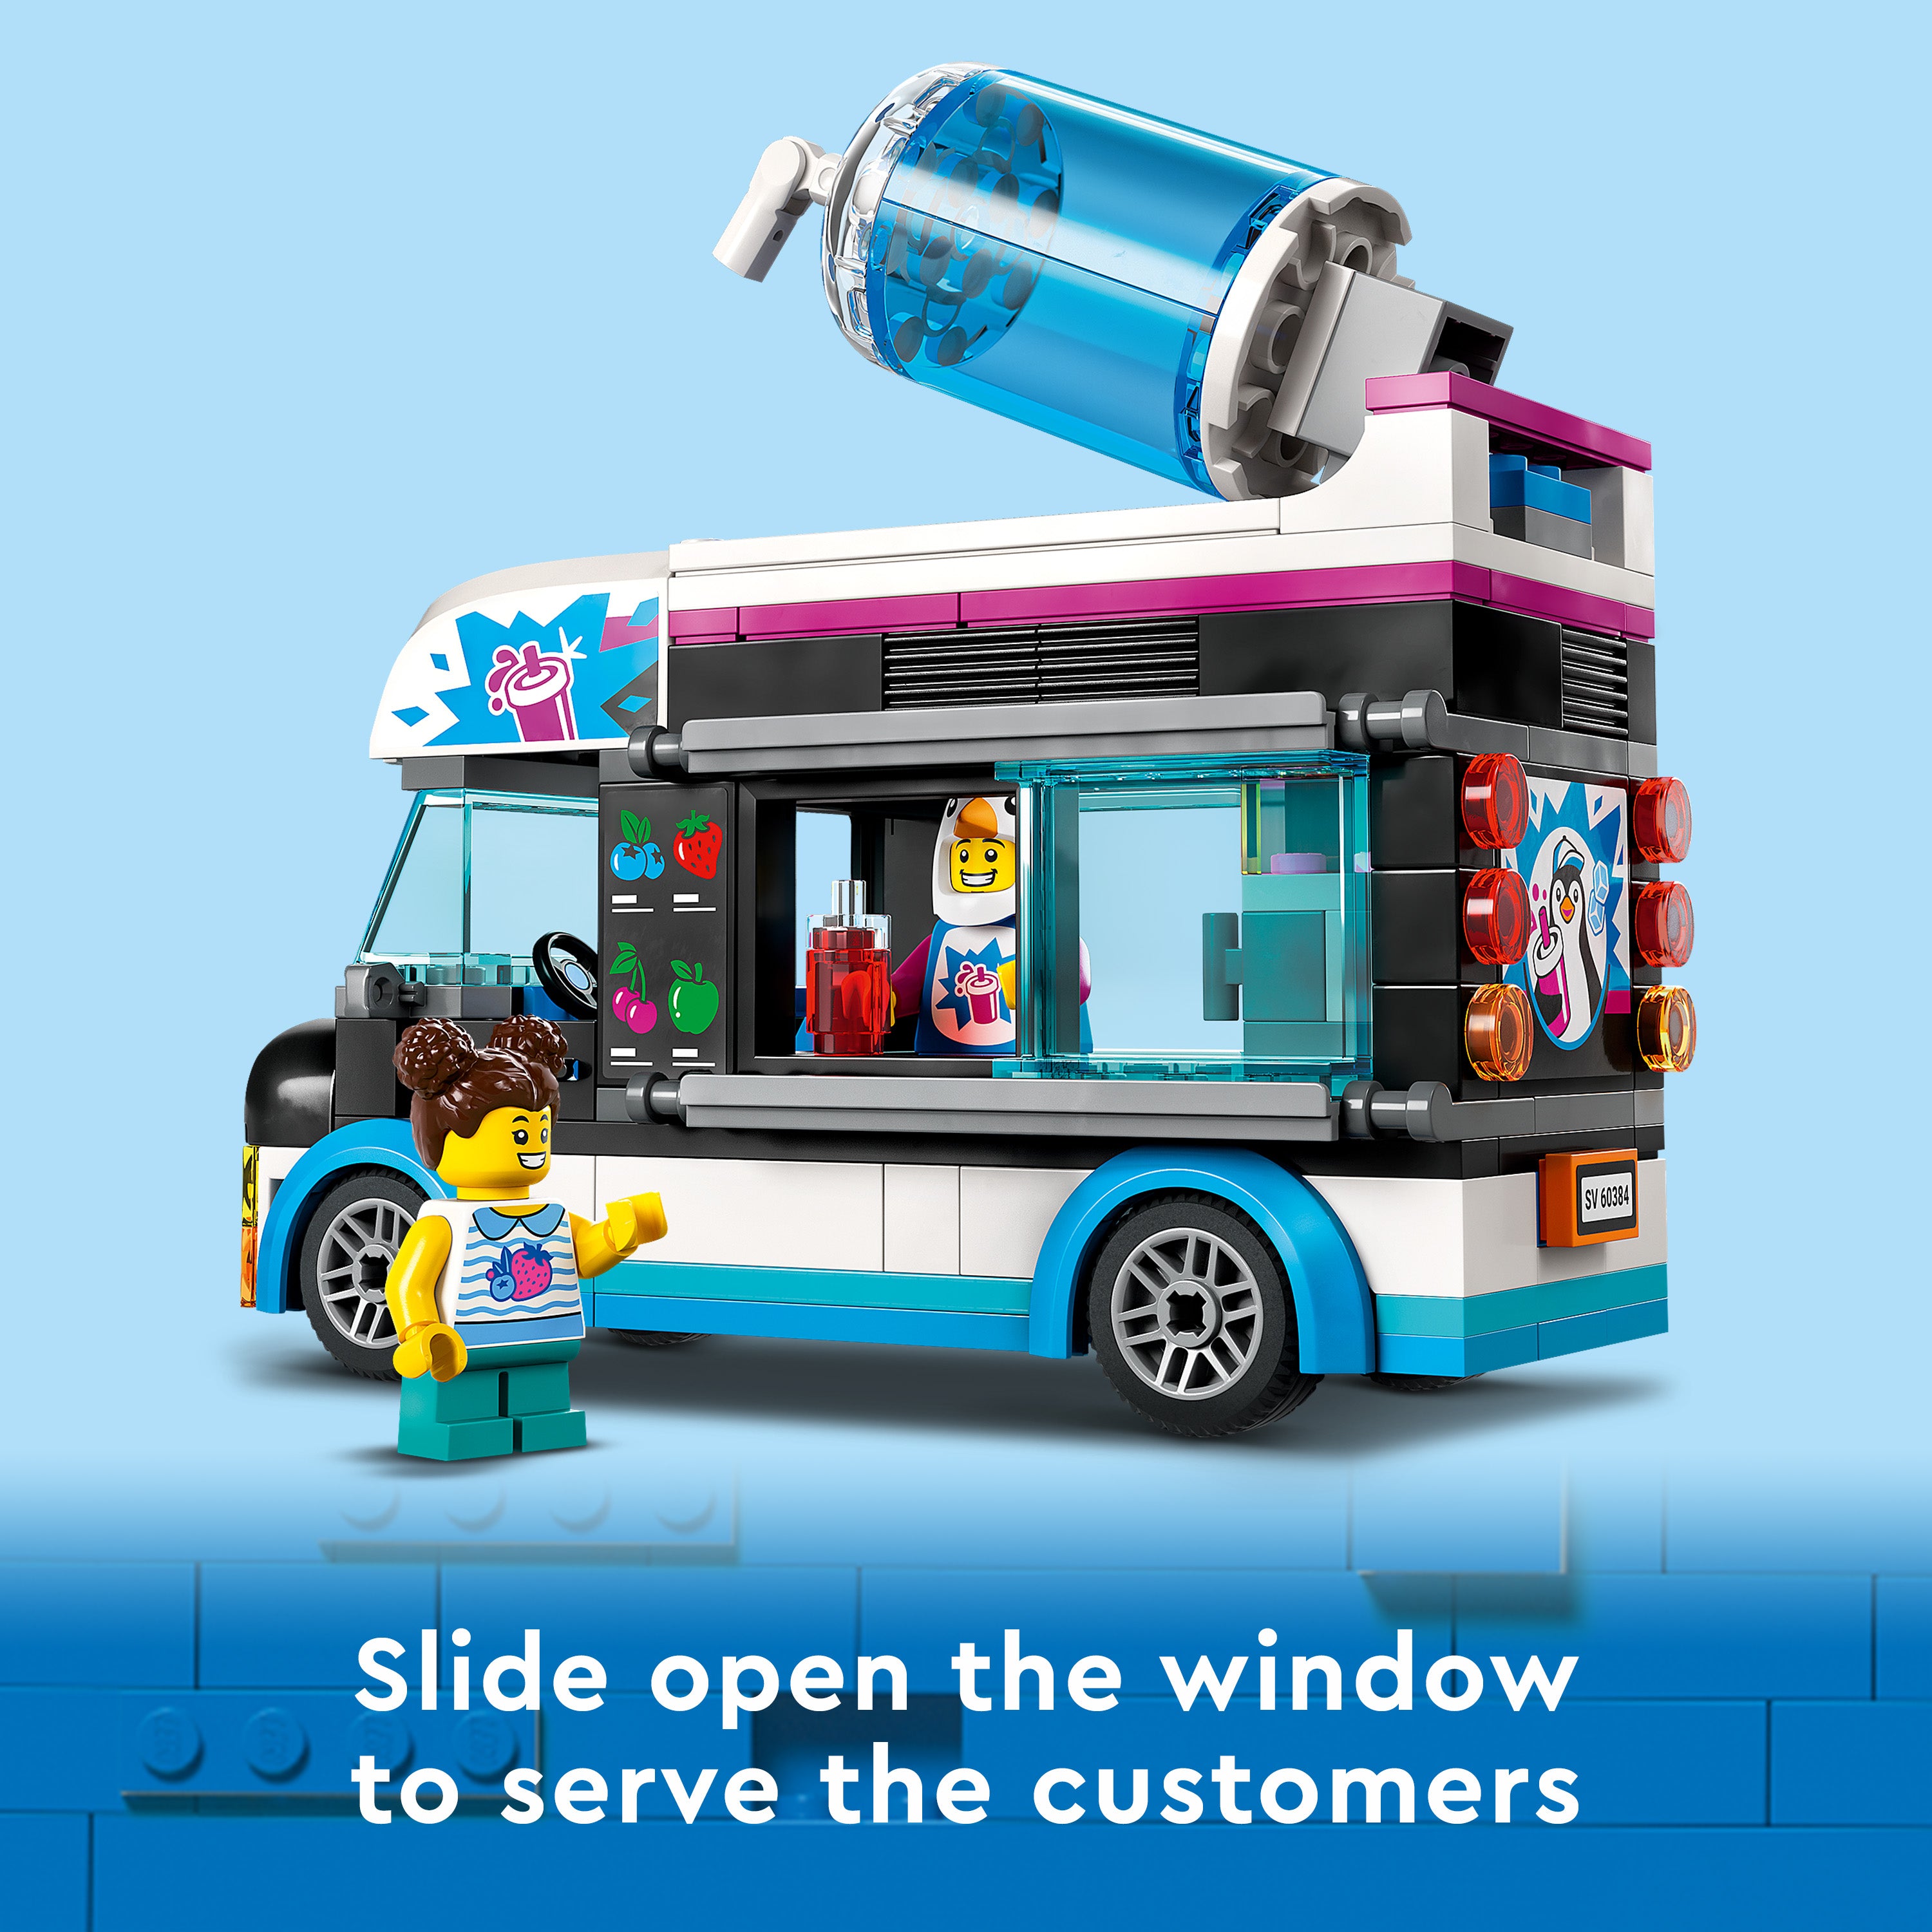 Lego 60384 Penguin Slushy Van